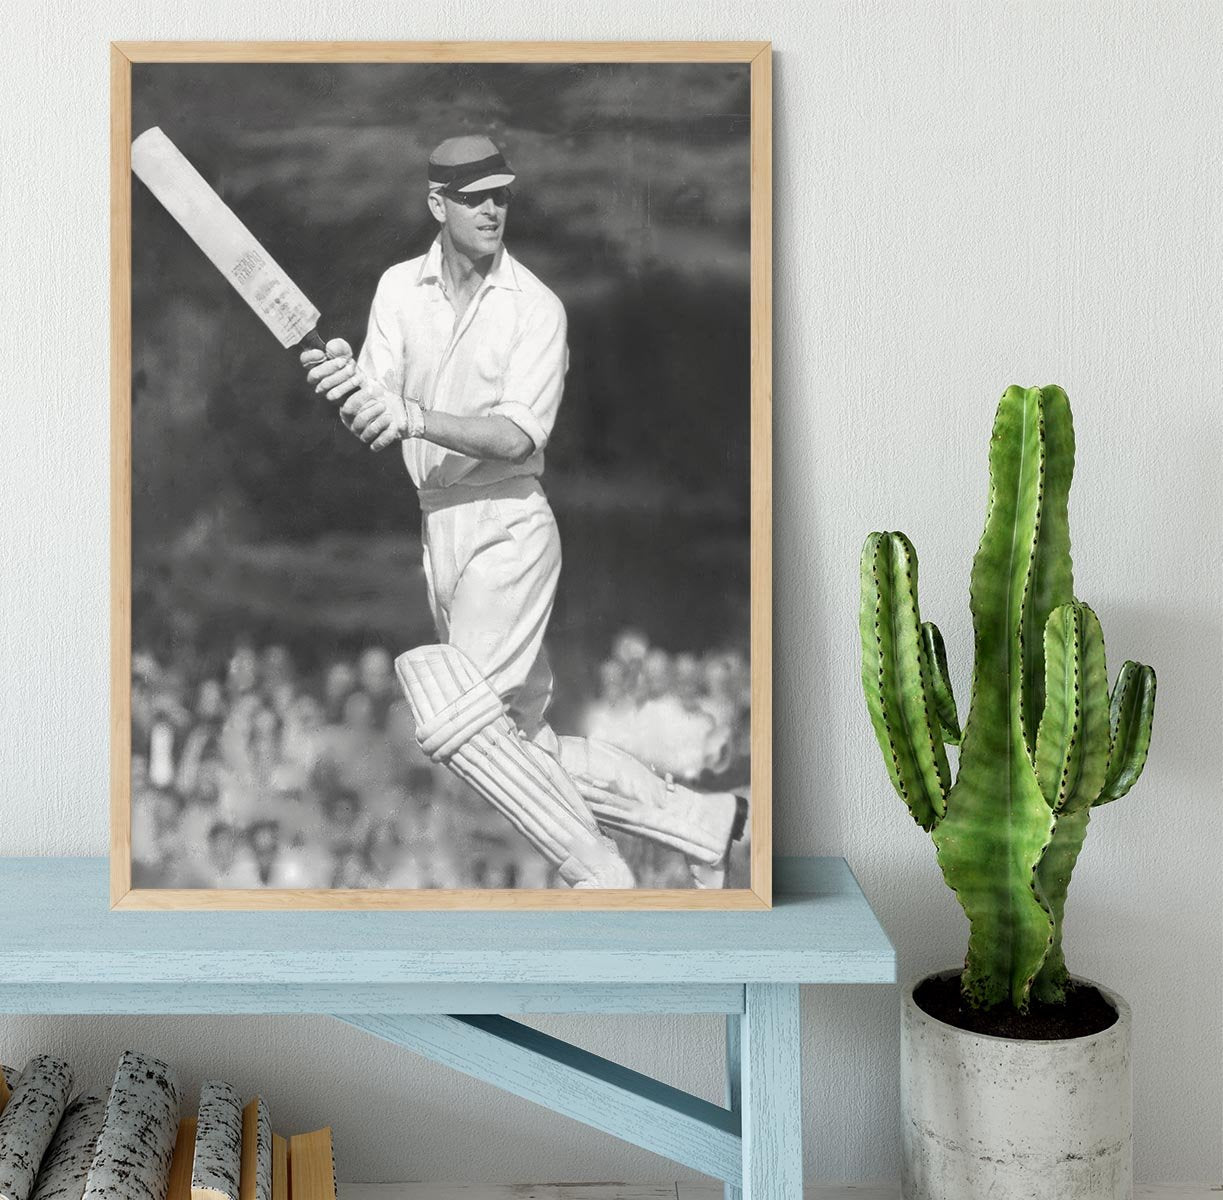 Prince Philip batting at a charity cricket match Framed Print - Canvas Art Rocks - 4